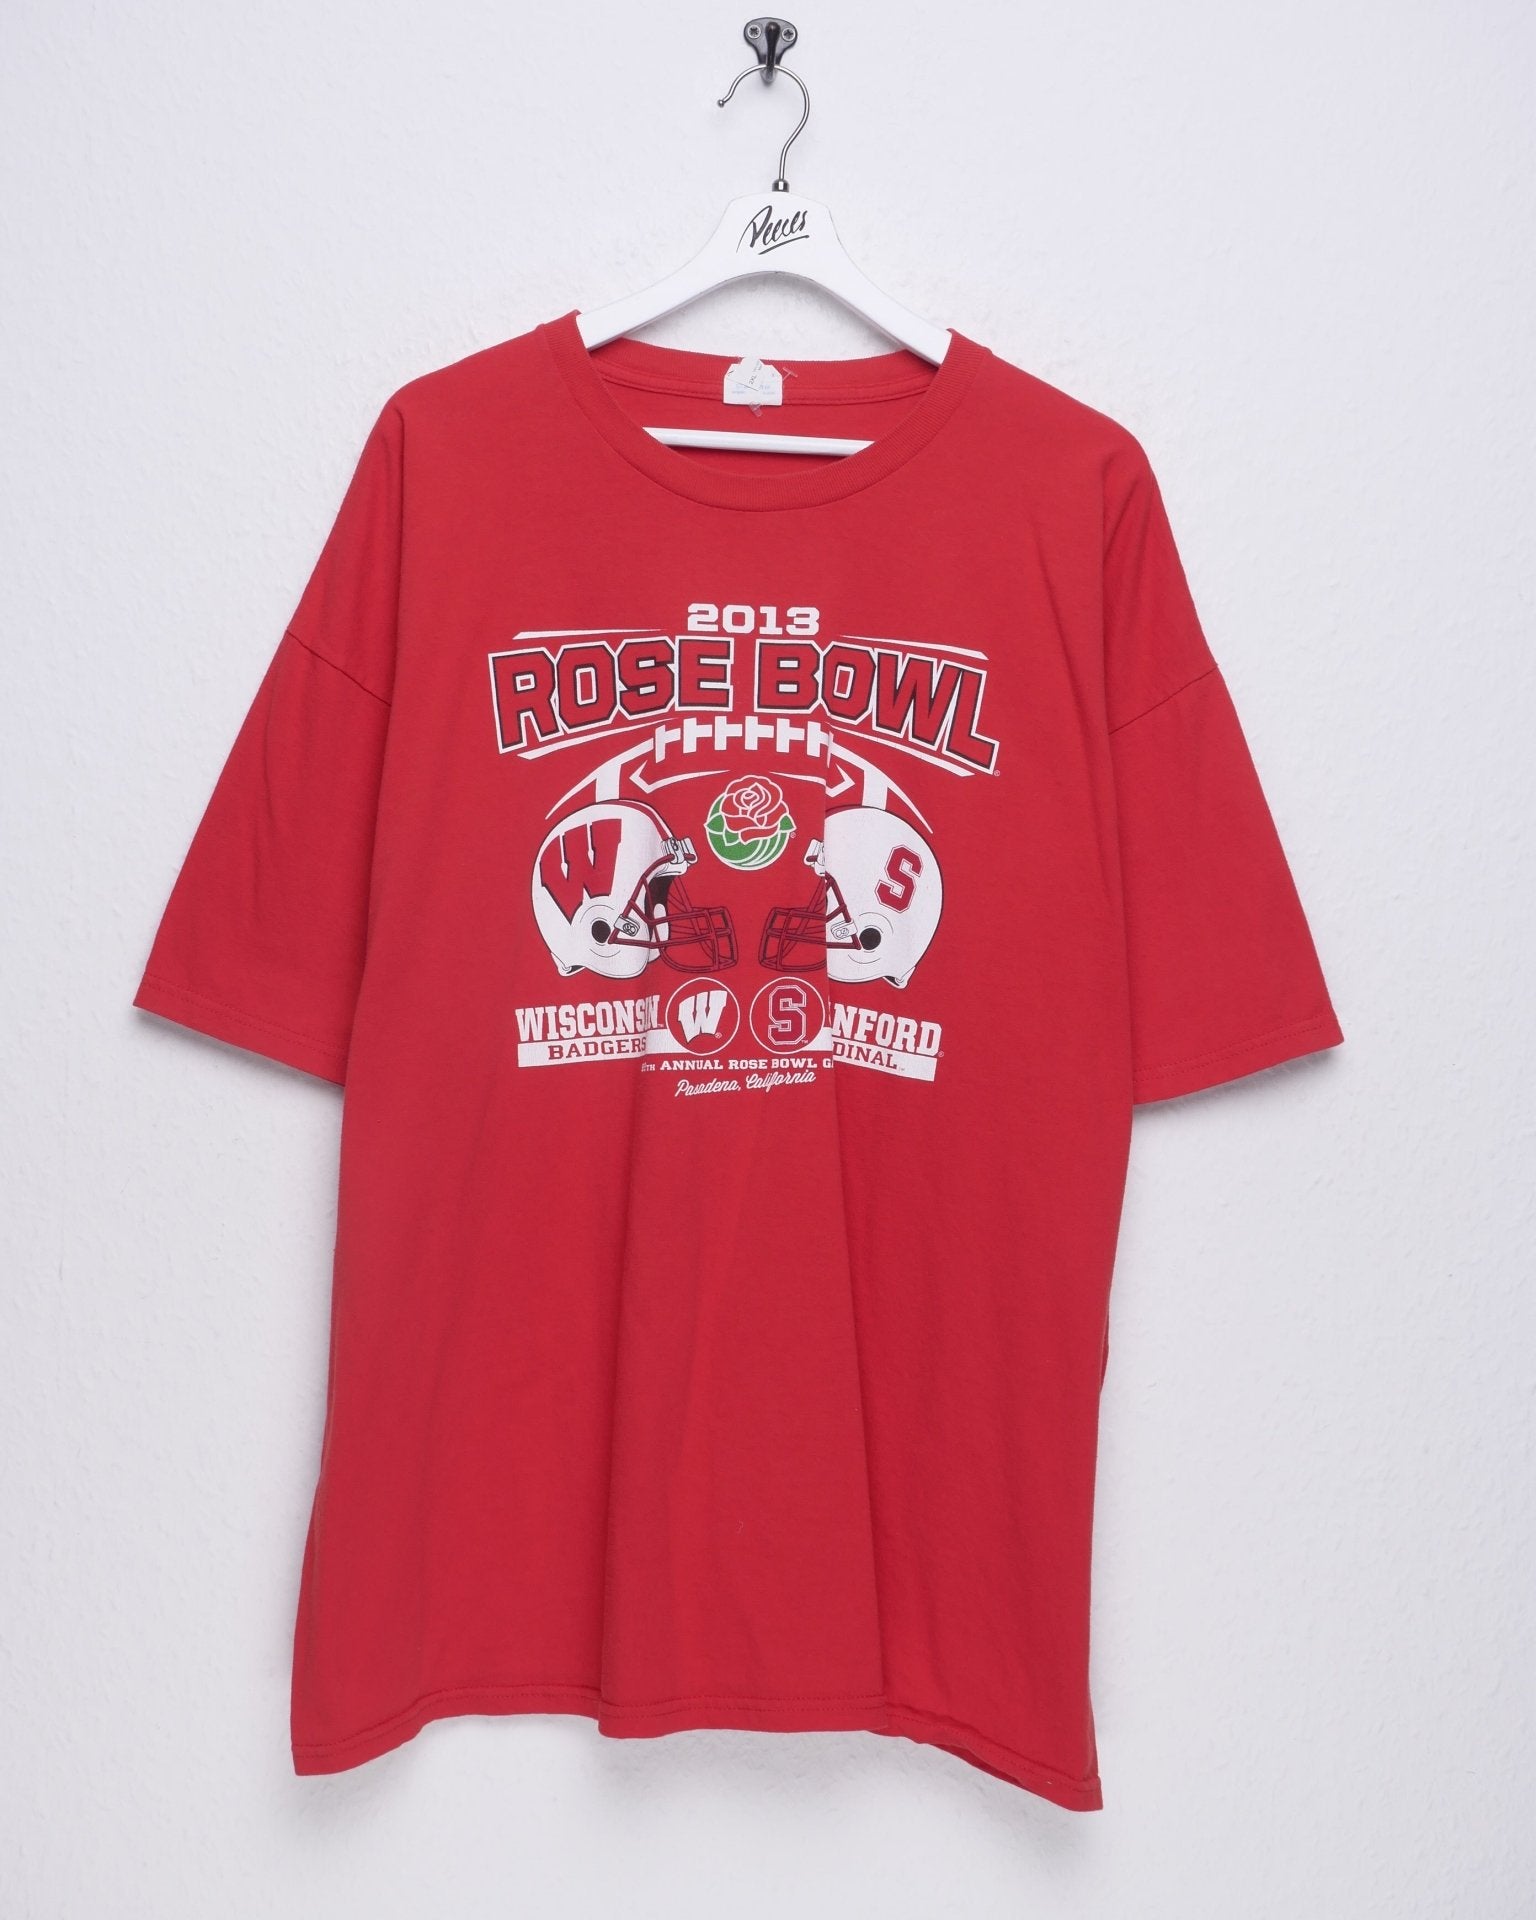 Rose Bowl printed Graphic Vintage Shirt - Peeces